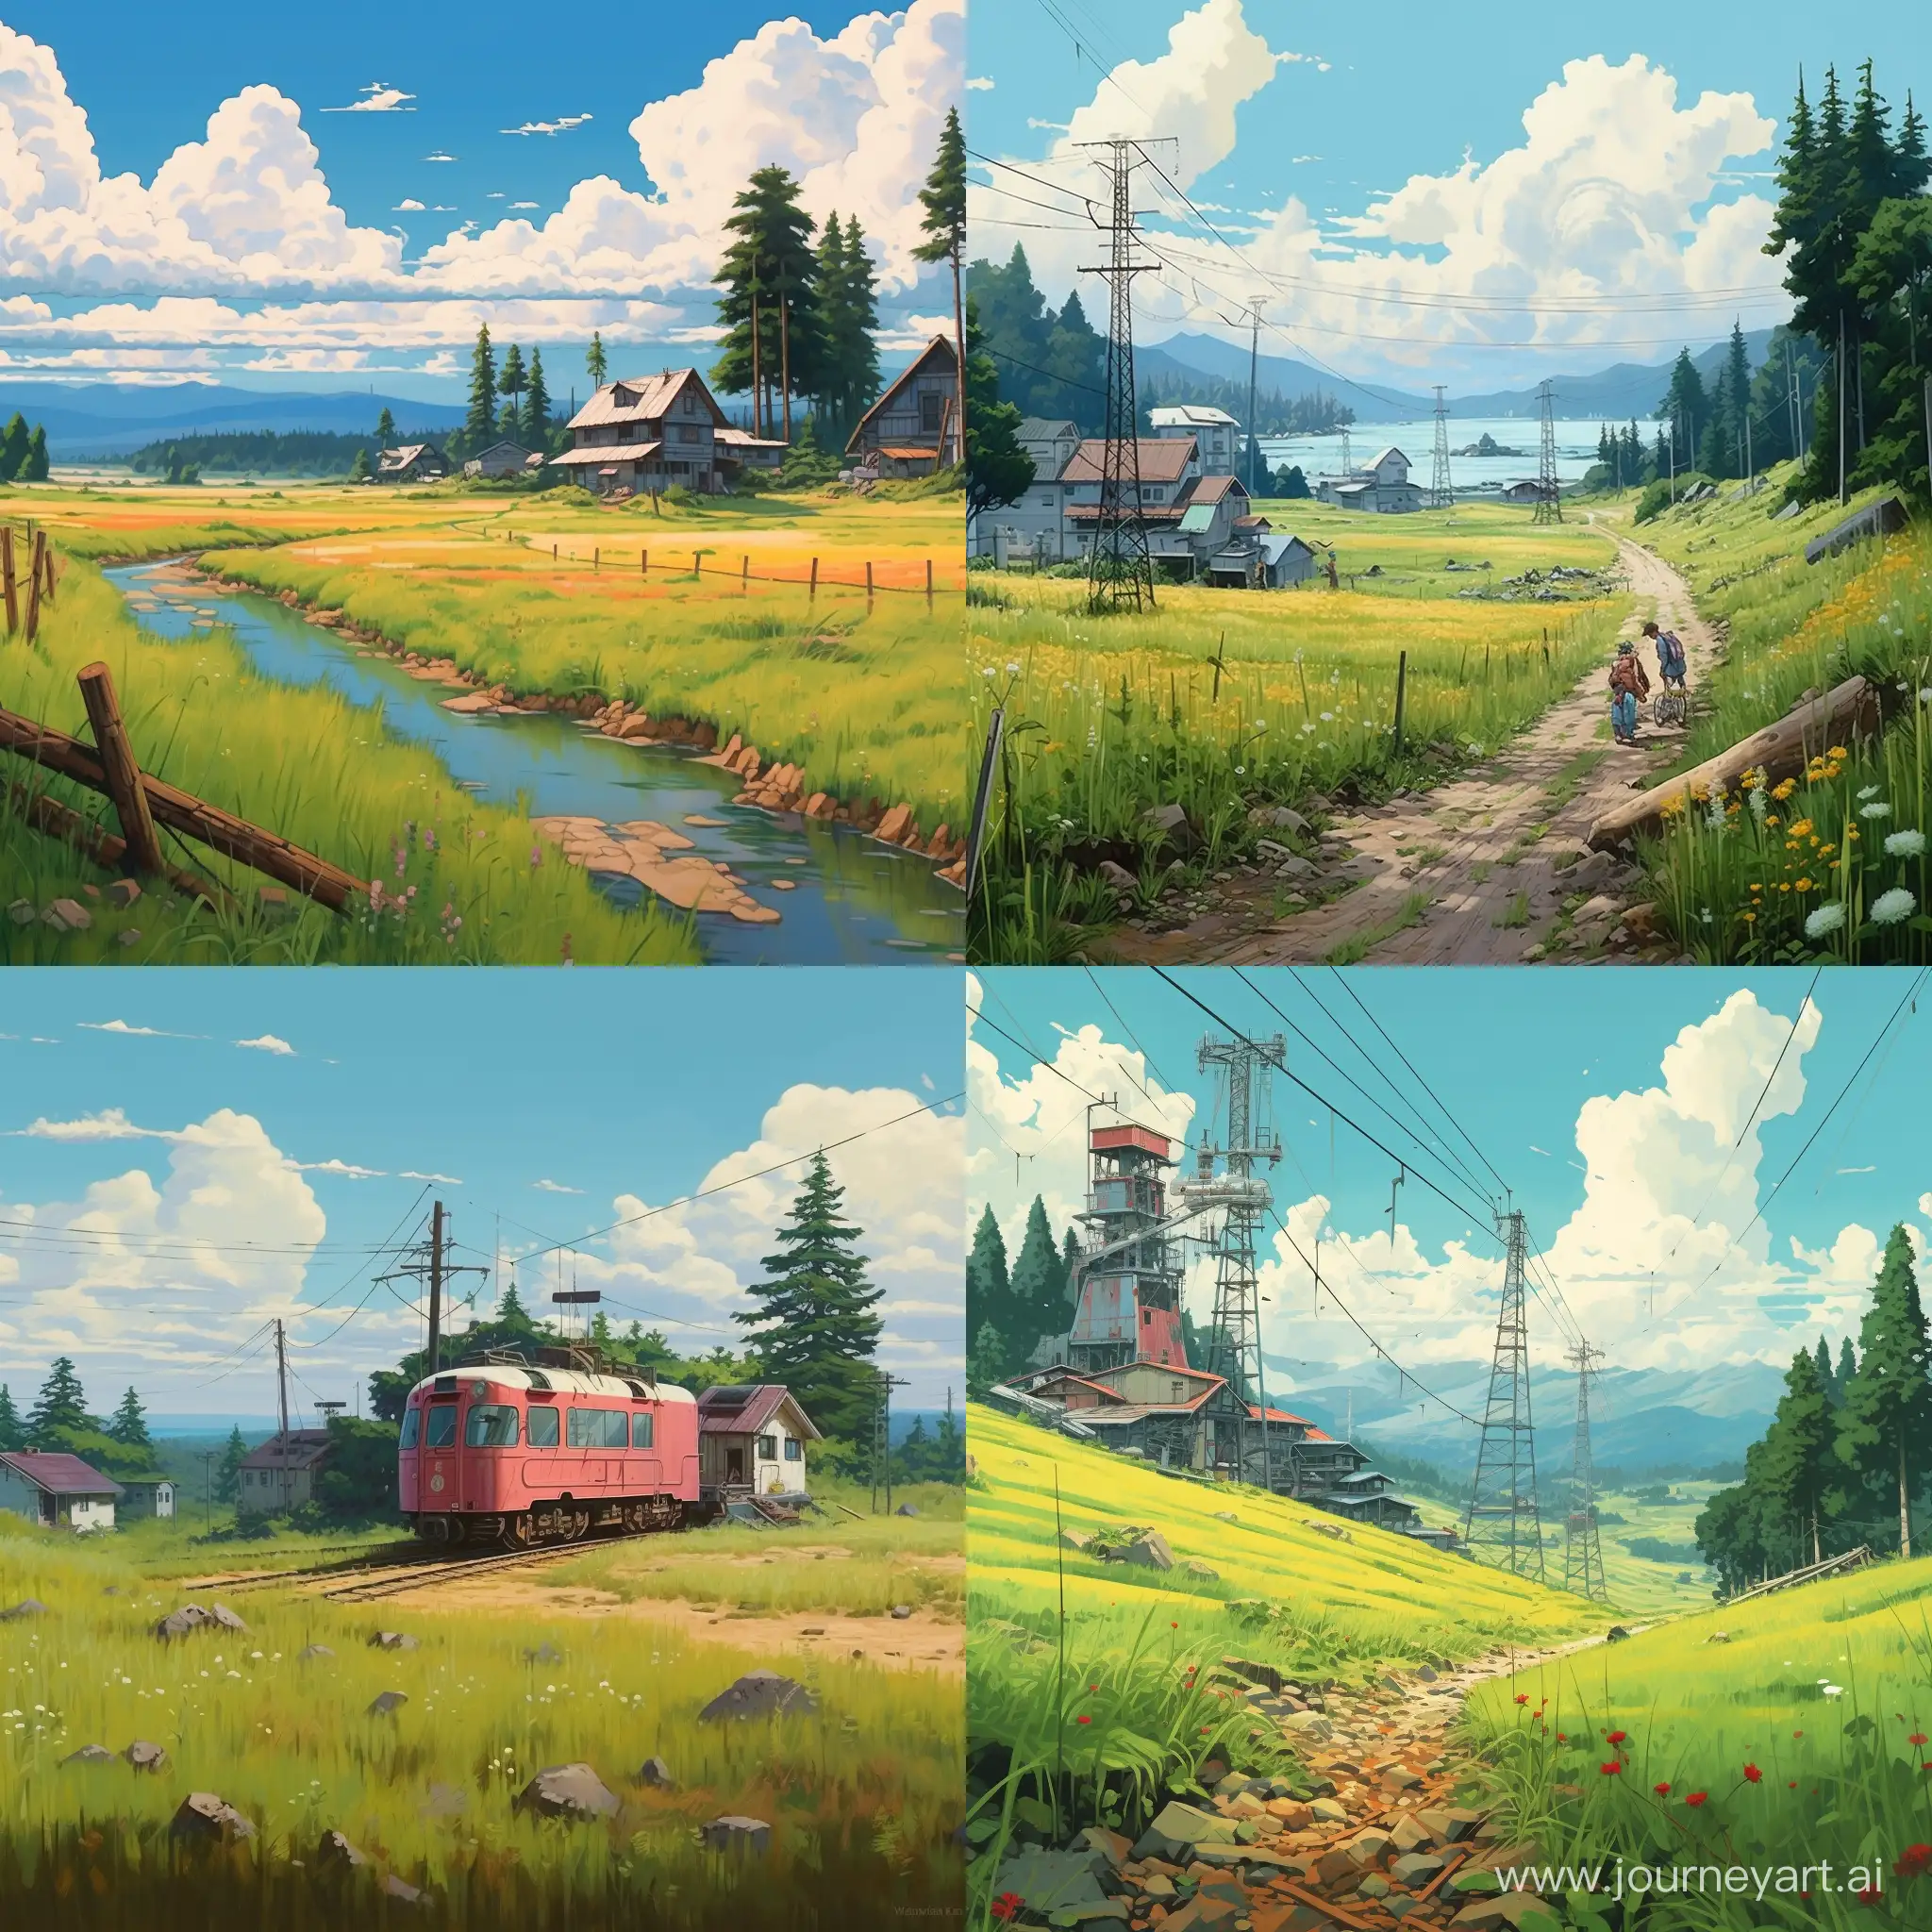 lanscape, japan countryside,, anime style, vibrant, realistic, by Akira Teresawa and simon stalenhag